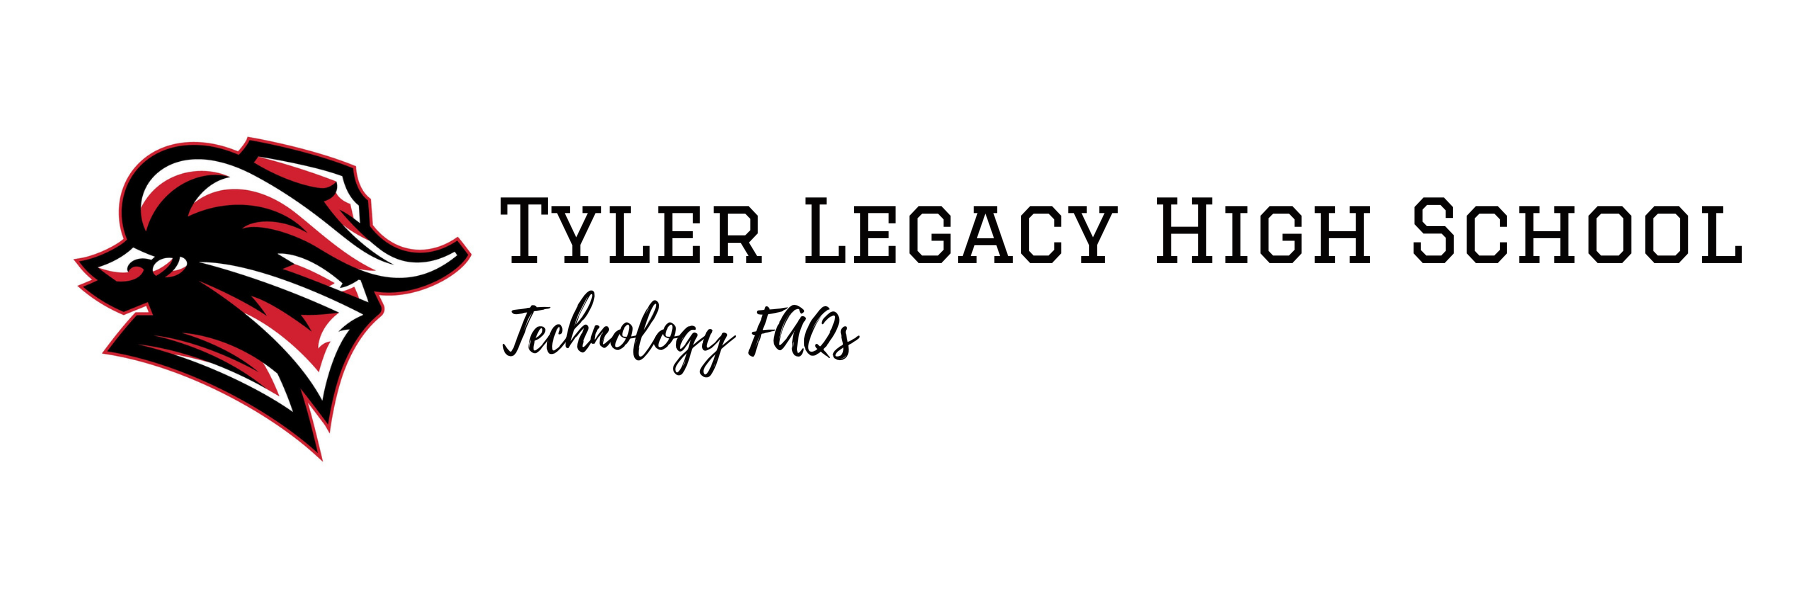 Tyler Legacy High School Technology FAQs